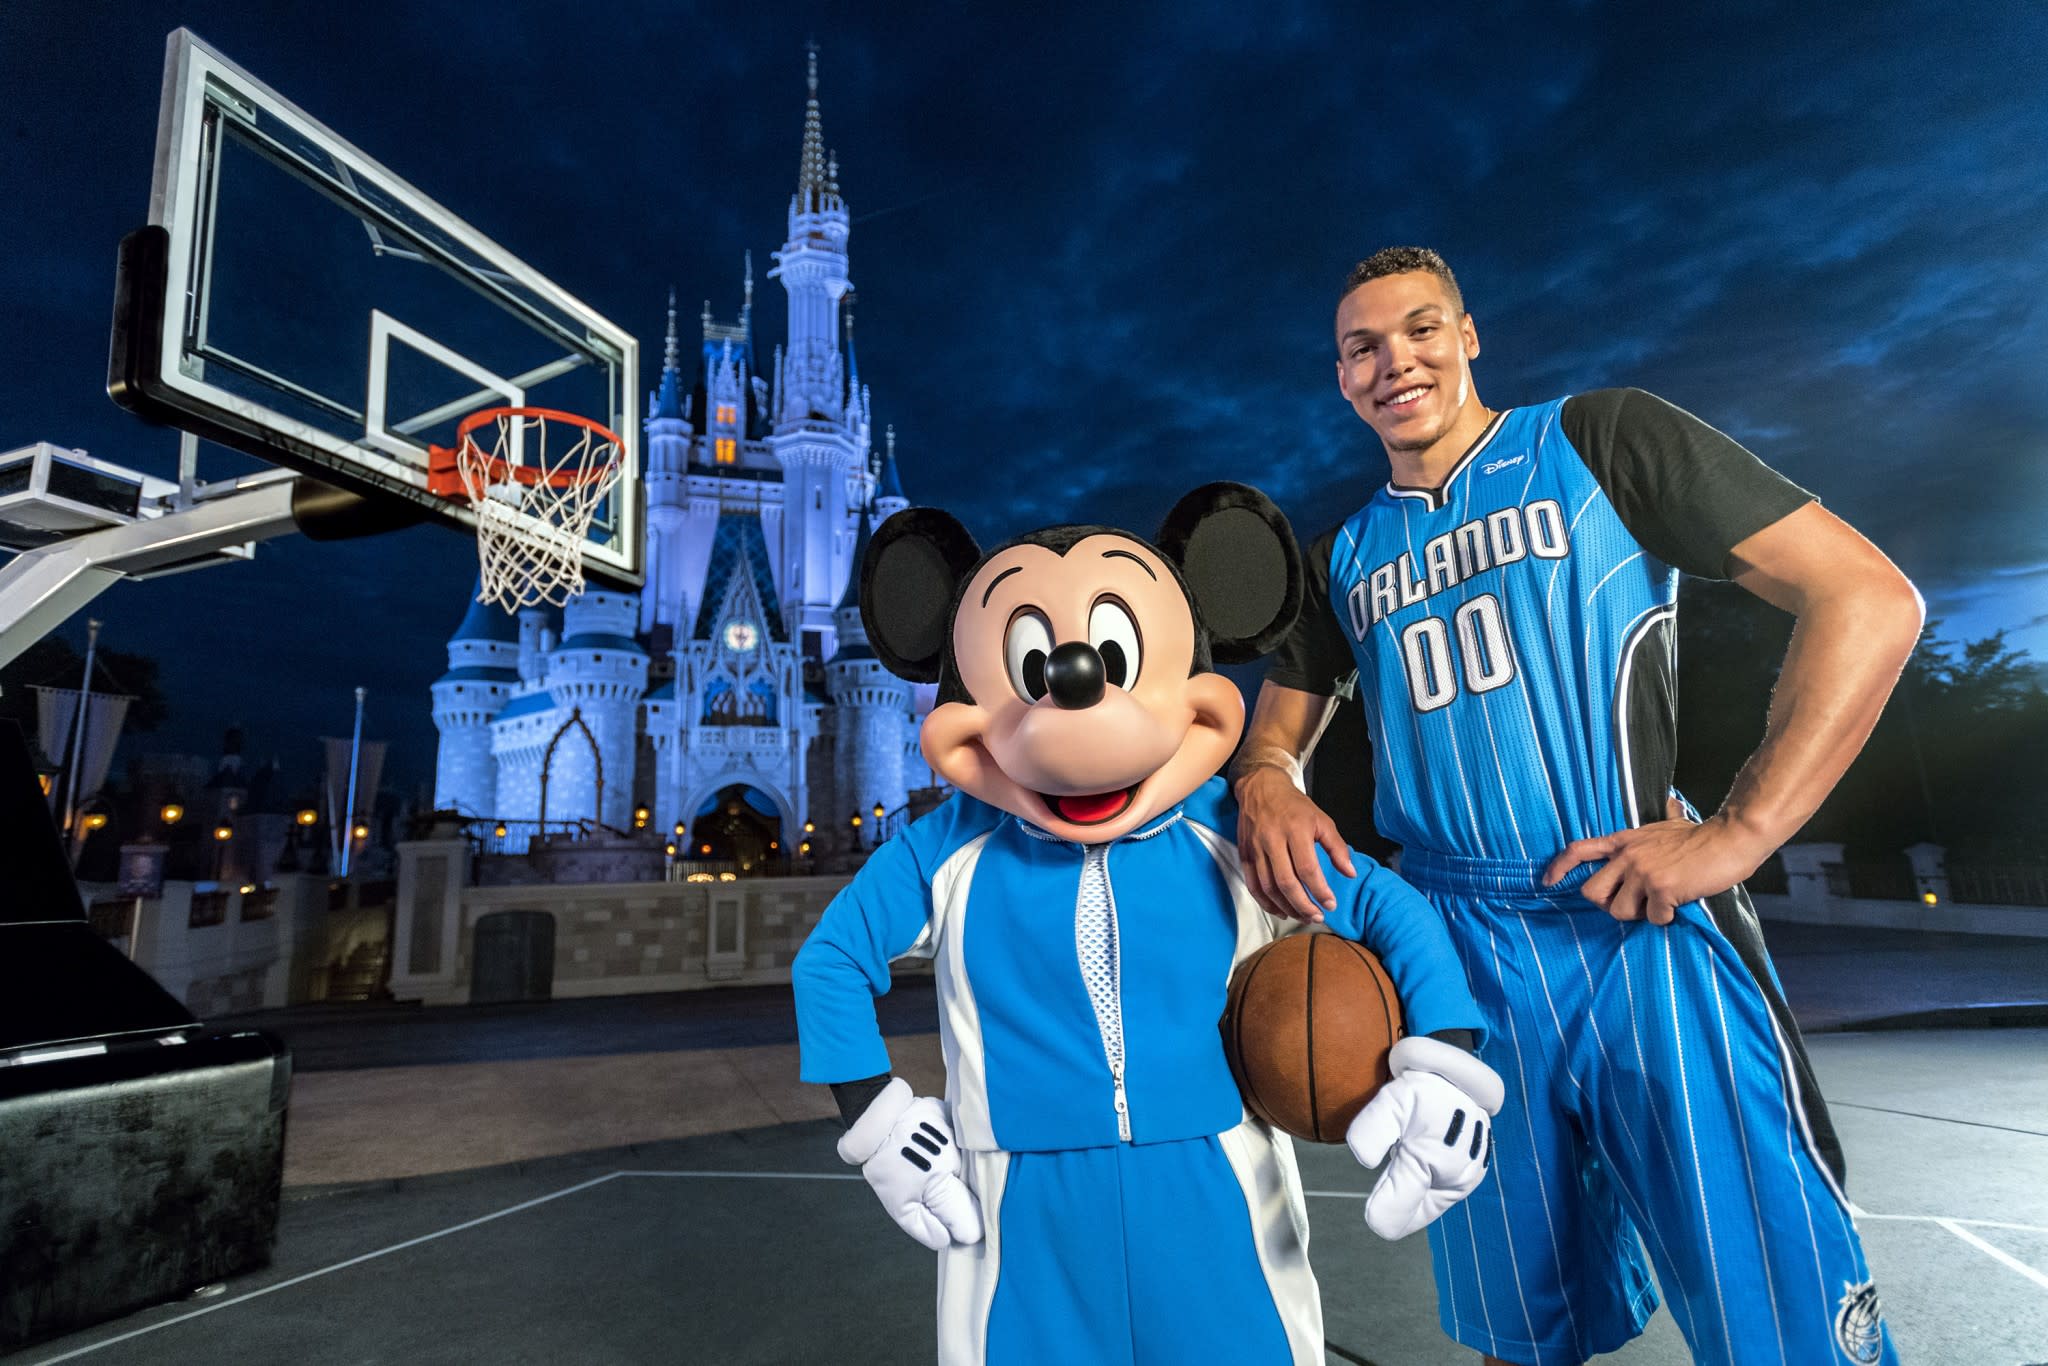 The Orlando Magic will wear Disney ads 